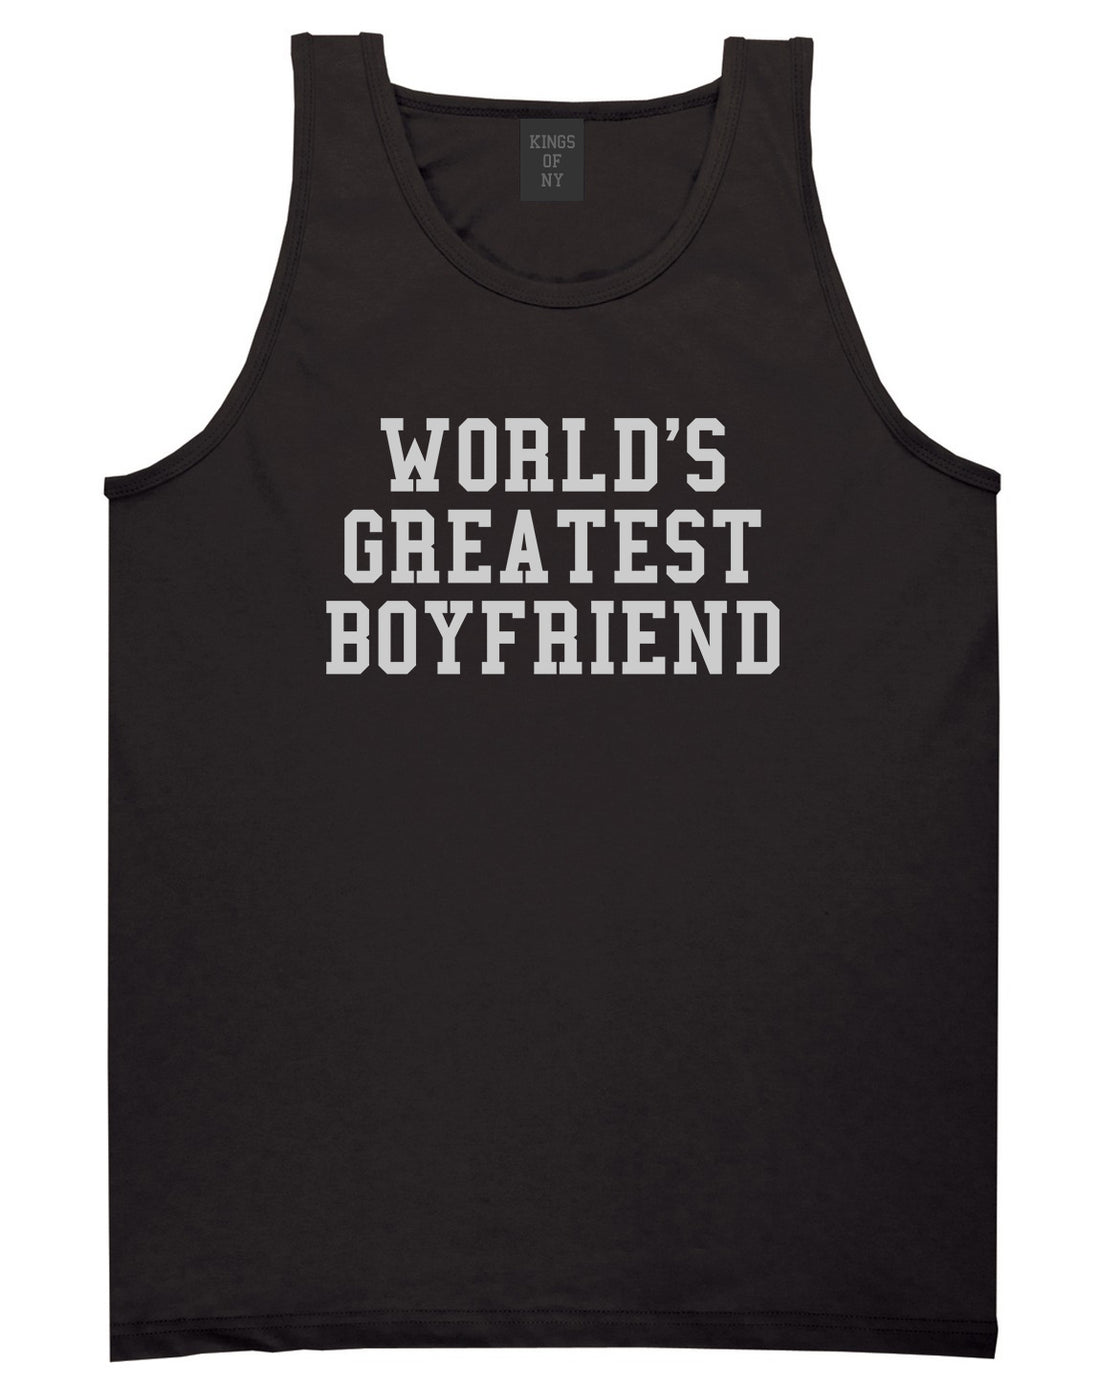 Worlds Greatest Boyfriend Funny Birthday Gift Mens Tank Top T-Shirt Black